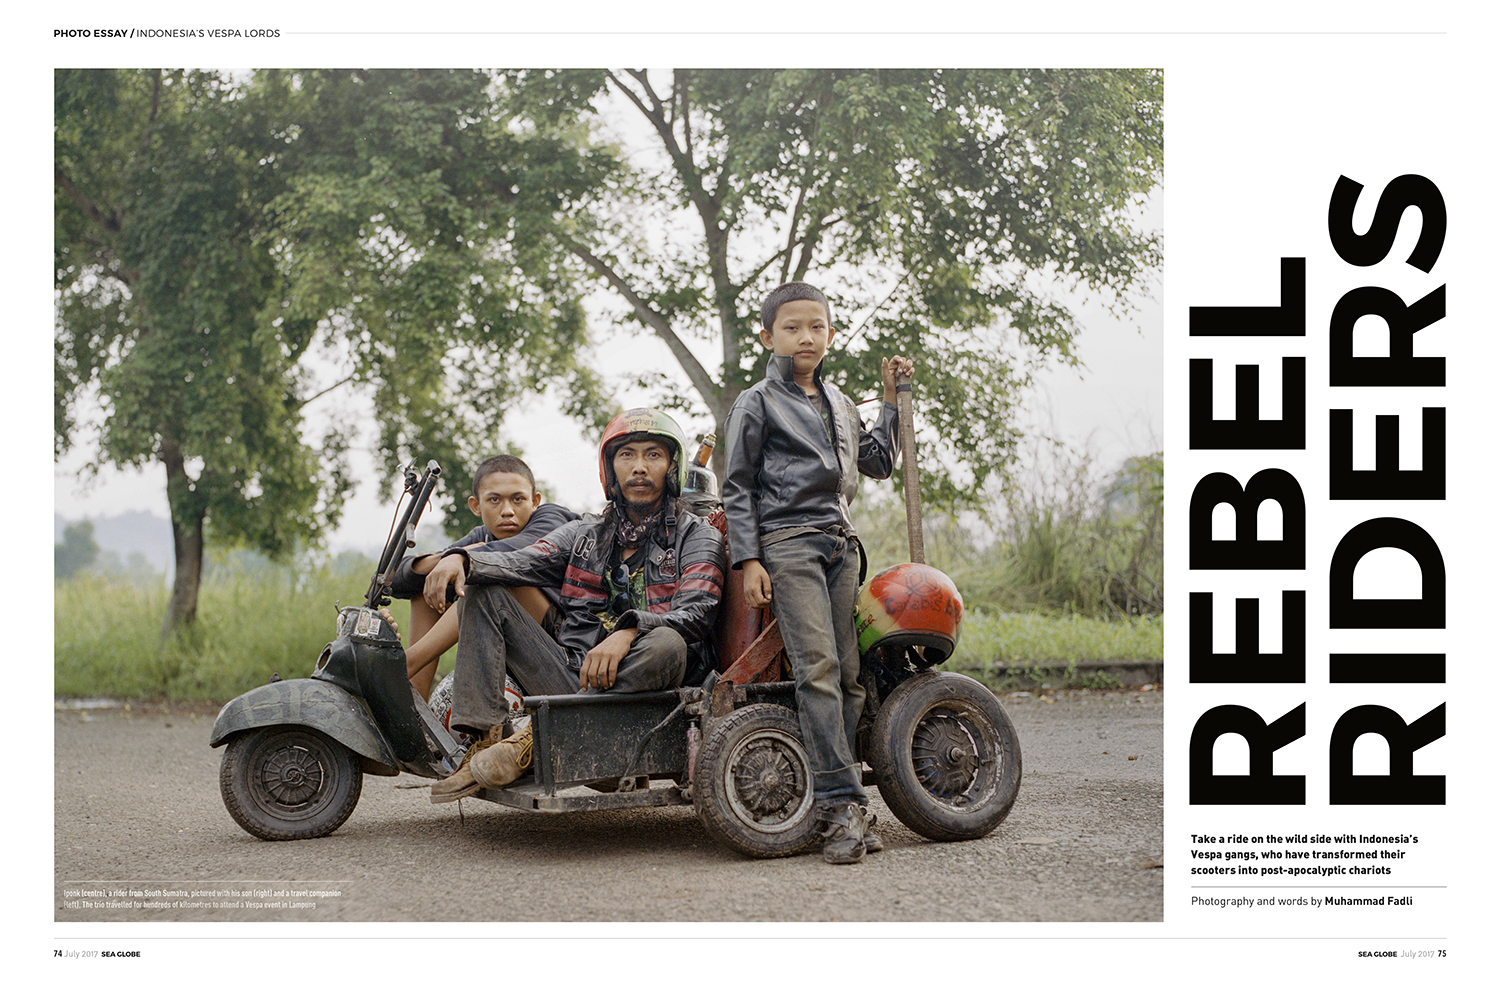  Rebel Riders (Indonesia's Extreme Vespa) in  SEA Globe Magazine  July 2017 